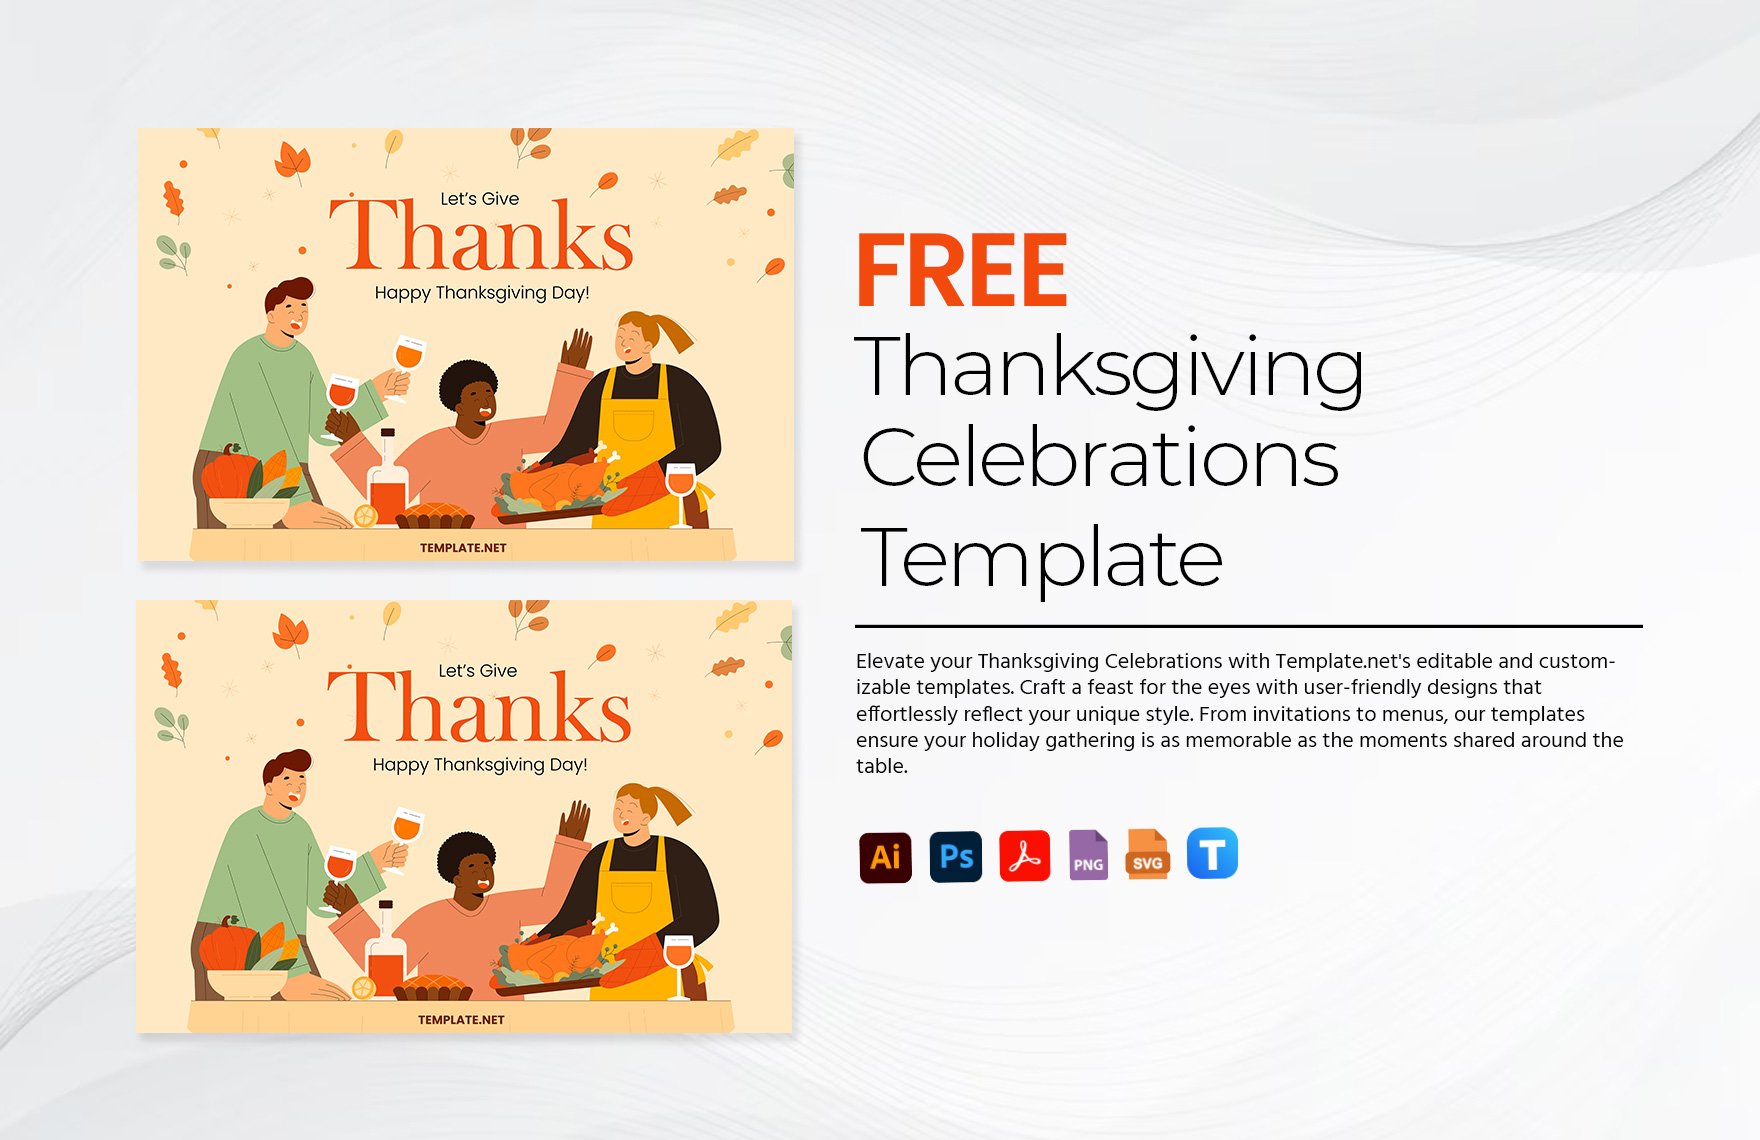 Free Thanksgiving Celebrations in PDF, Illustrator, PSD, SVG, PNG